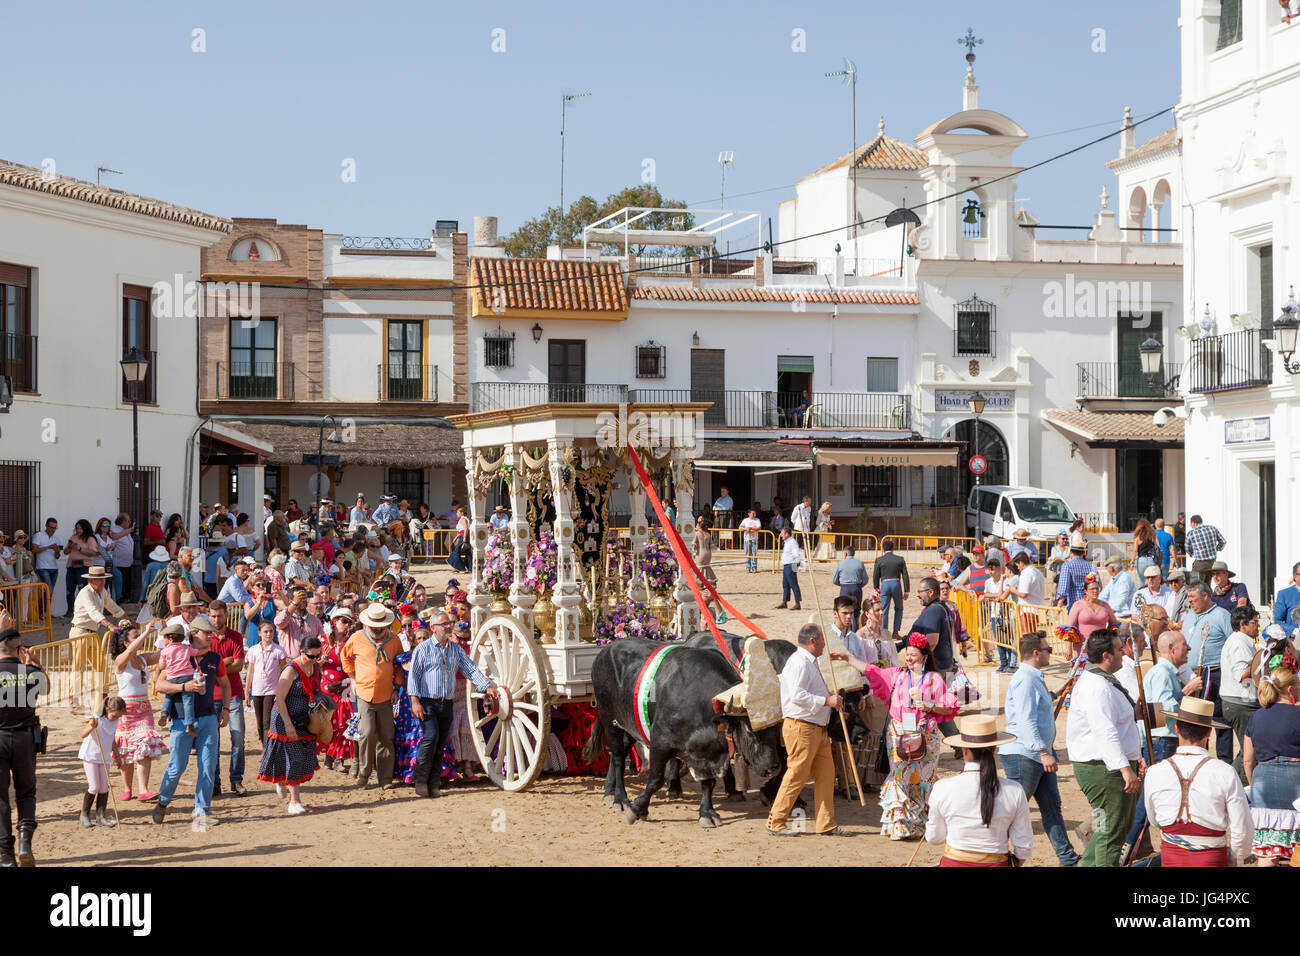 El Rocio, Spain - June 2, 2017: Pilgrims with a bull-drawn carriage in El Rocio during the pilgrimage Romeria 2017. Province of Huelva, Andalusia, Spa Stock Photo